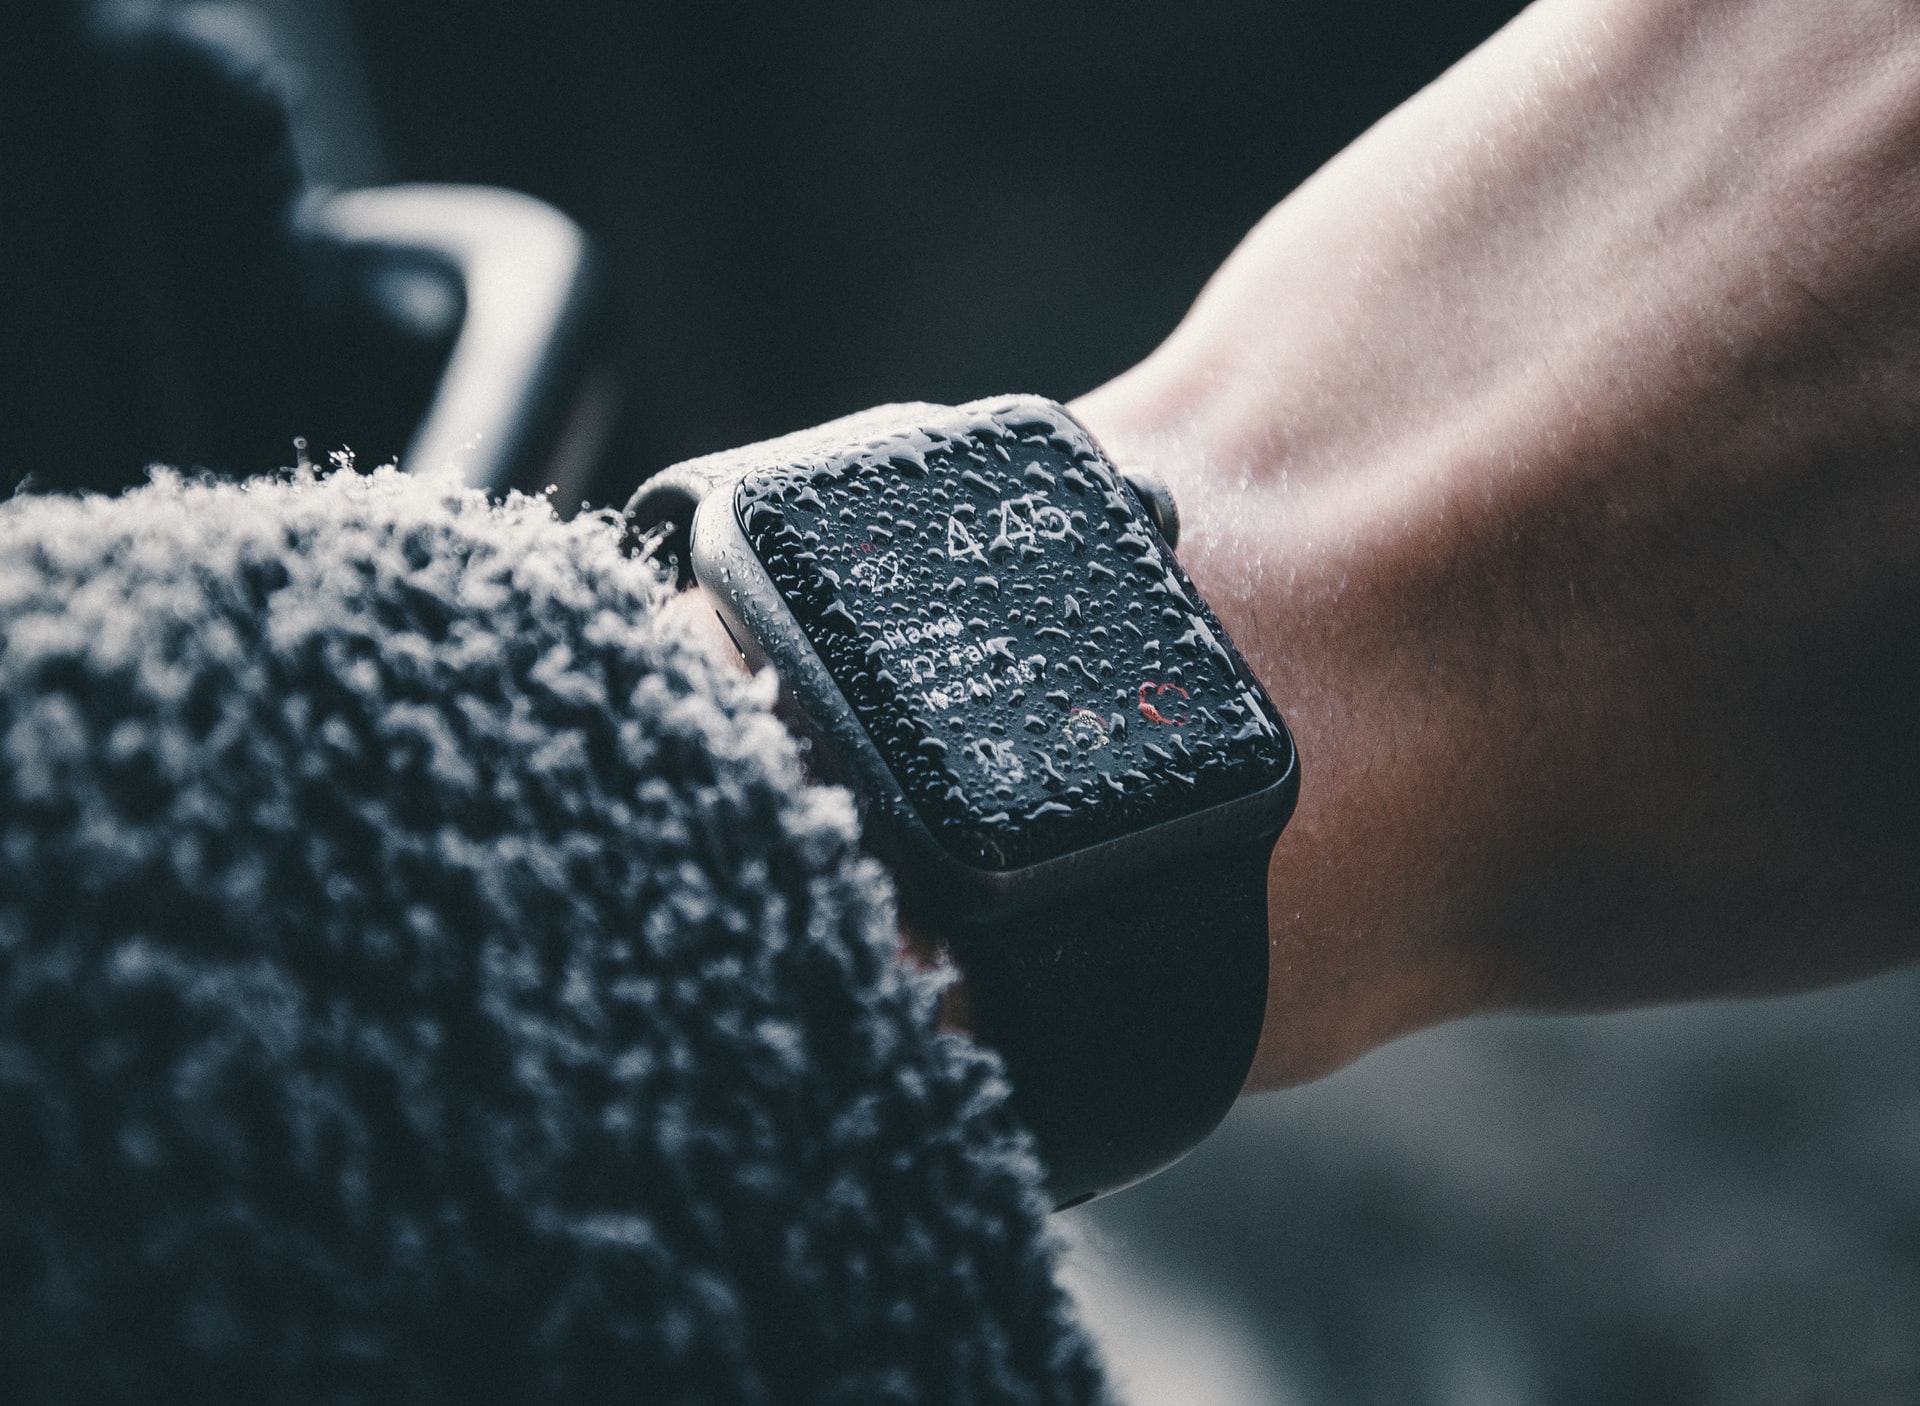 Apple Watch "Explorer Edition" smartwatch